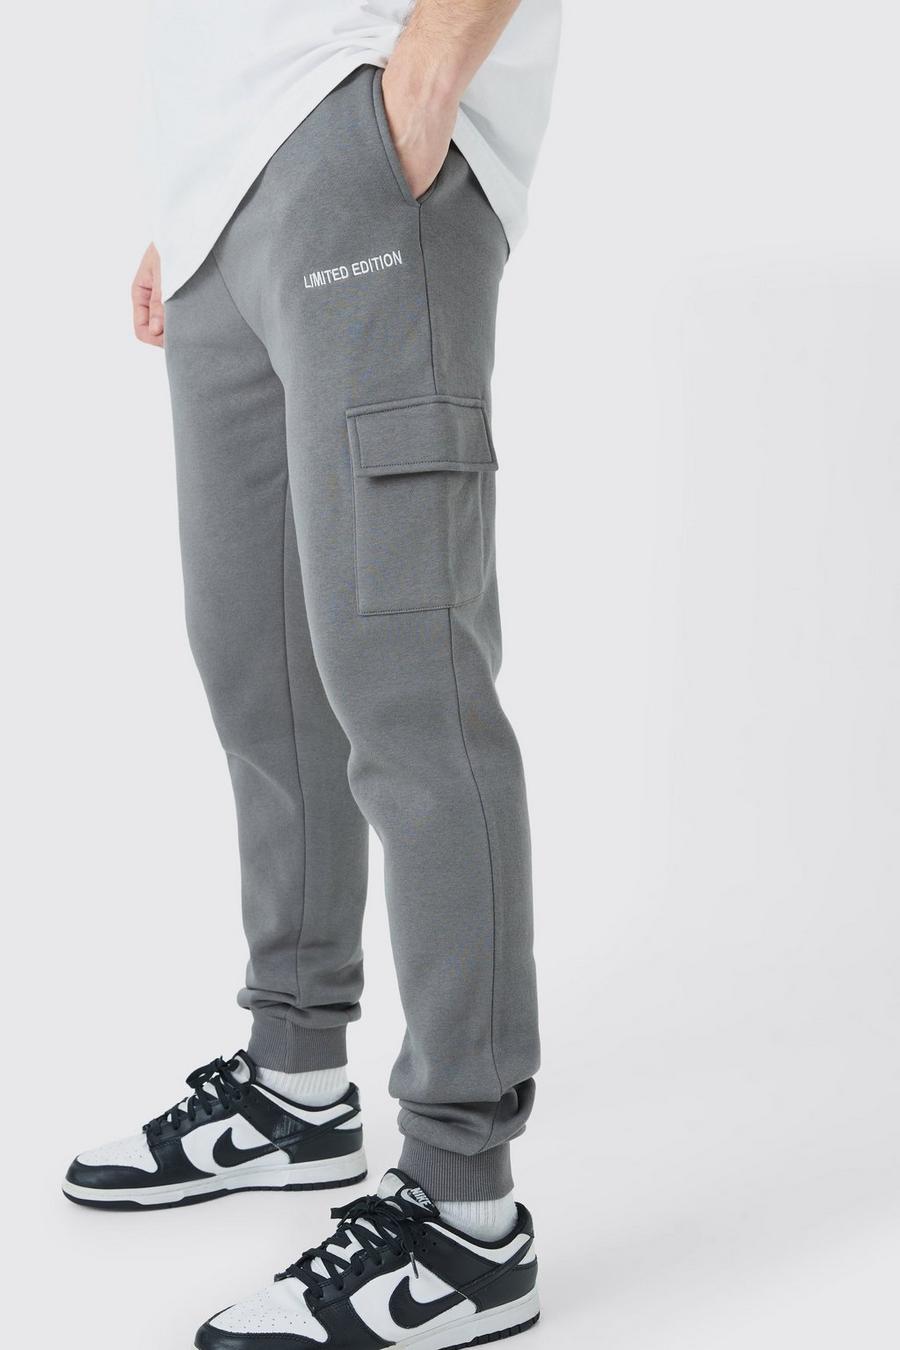 Pantalón deportivo Tall cargo pitillo Limited Edition, Charcoal